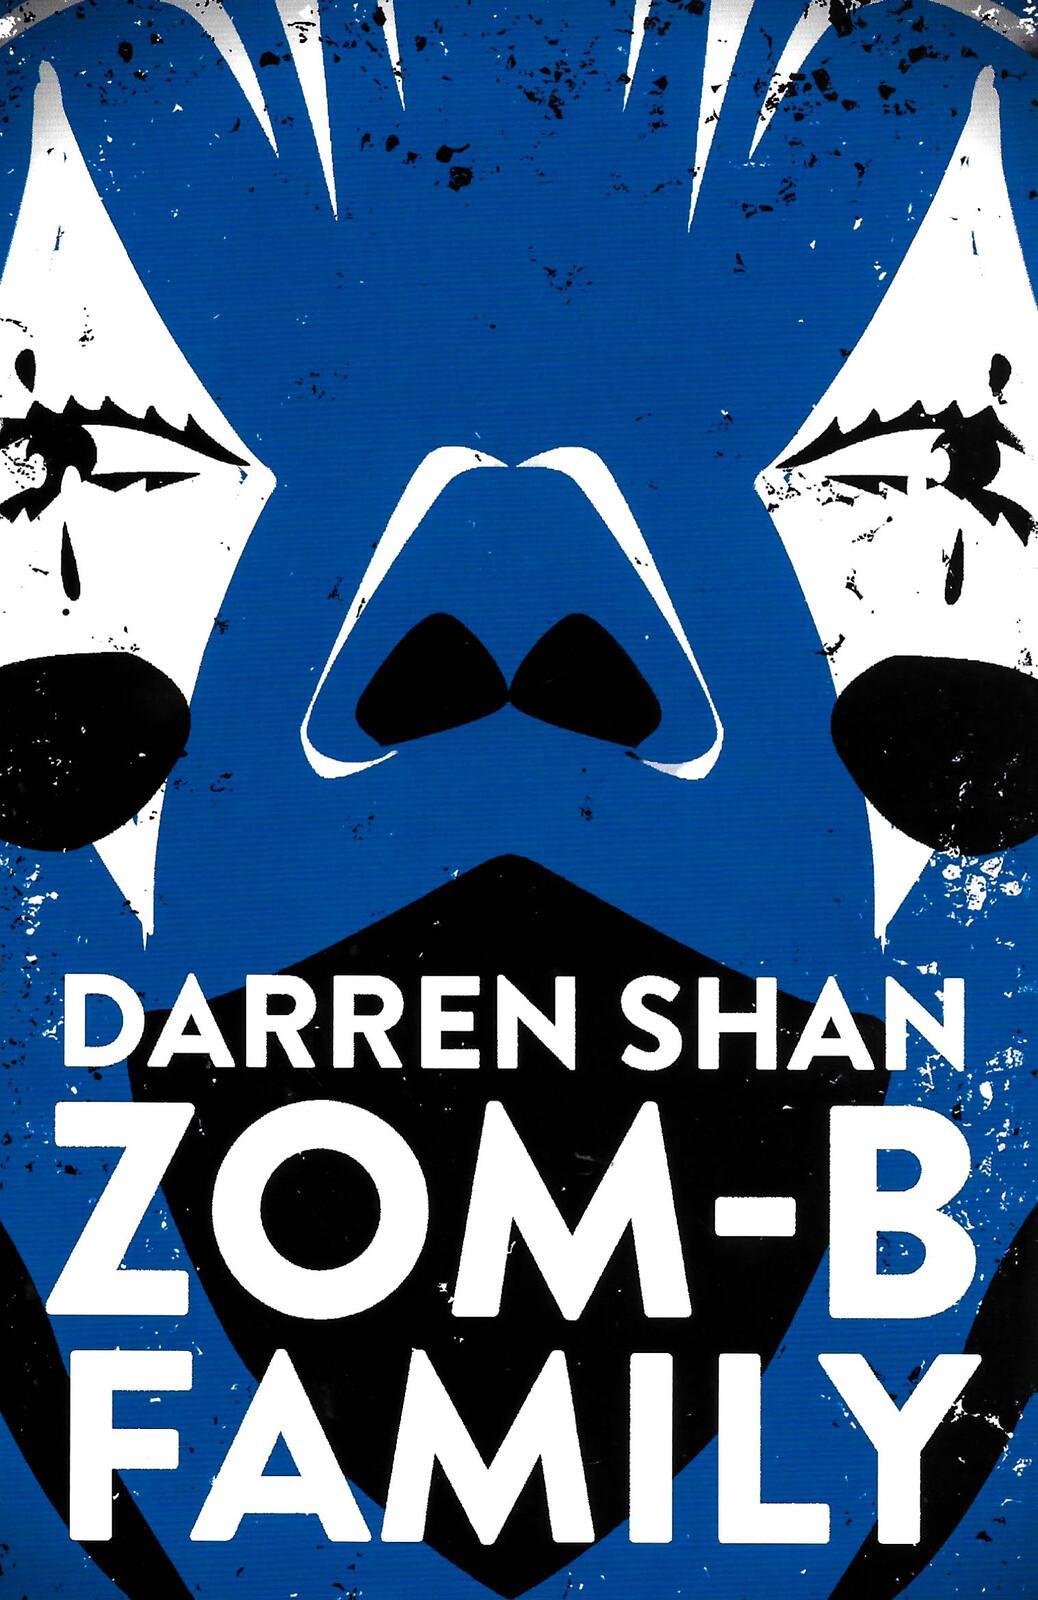 Zom-B - Family -Darren Shan Fiction Book